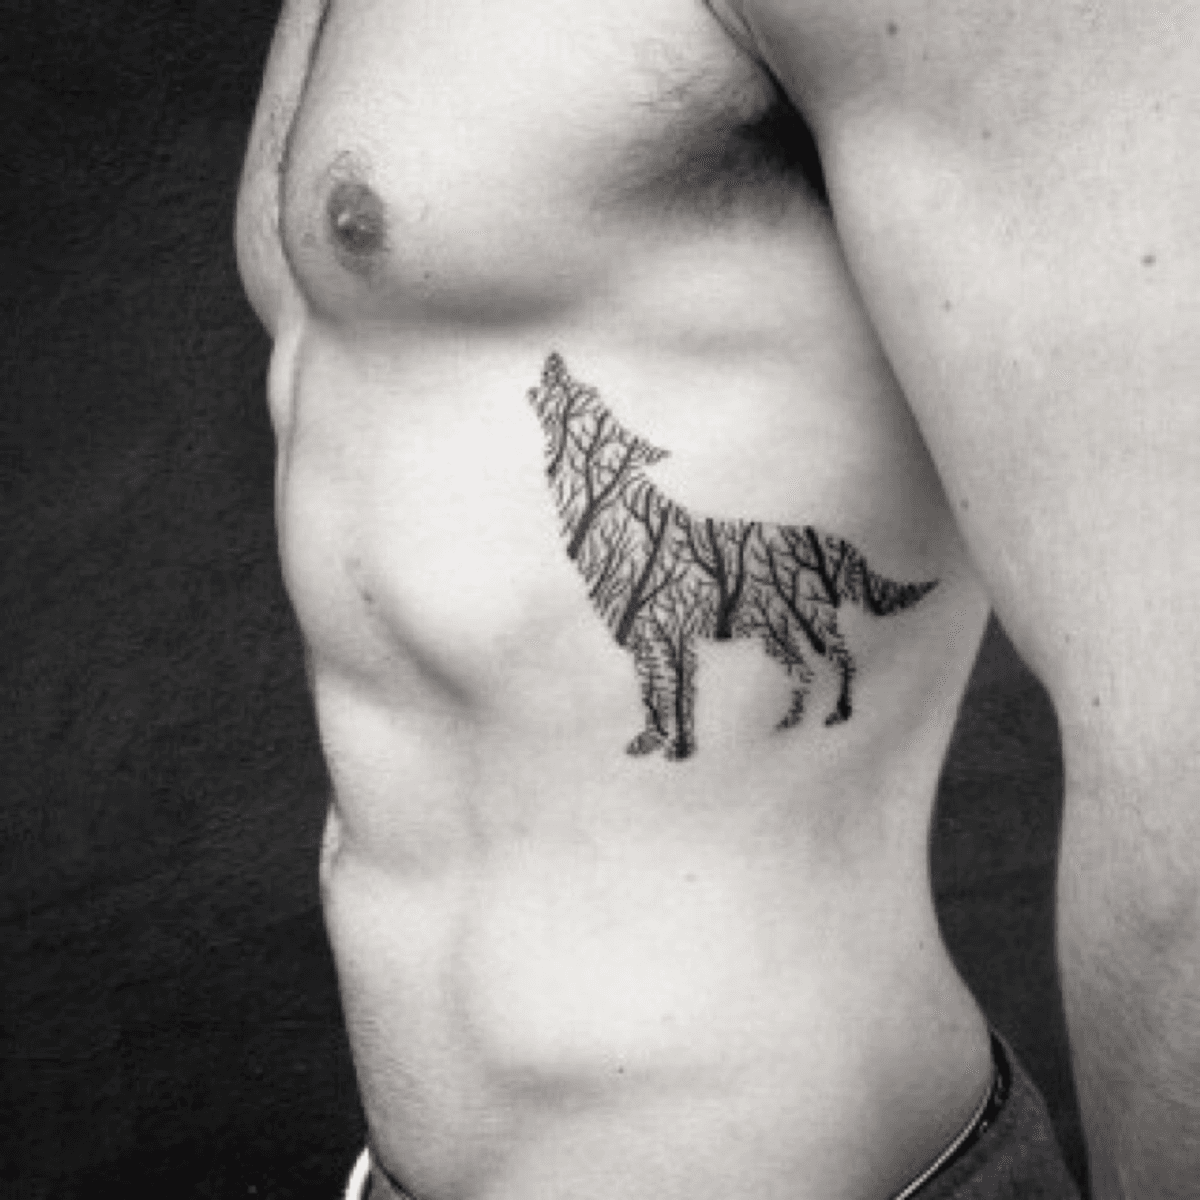 Tattoo uploaded by Ignas • #futuretattoo #animal #wolf #forest  #foresttattoo #linework #simple #minimalist • Tattoodo